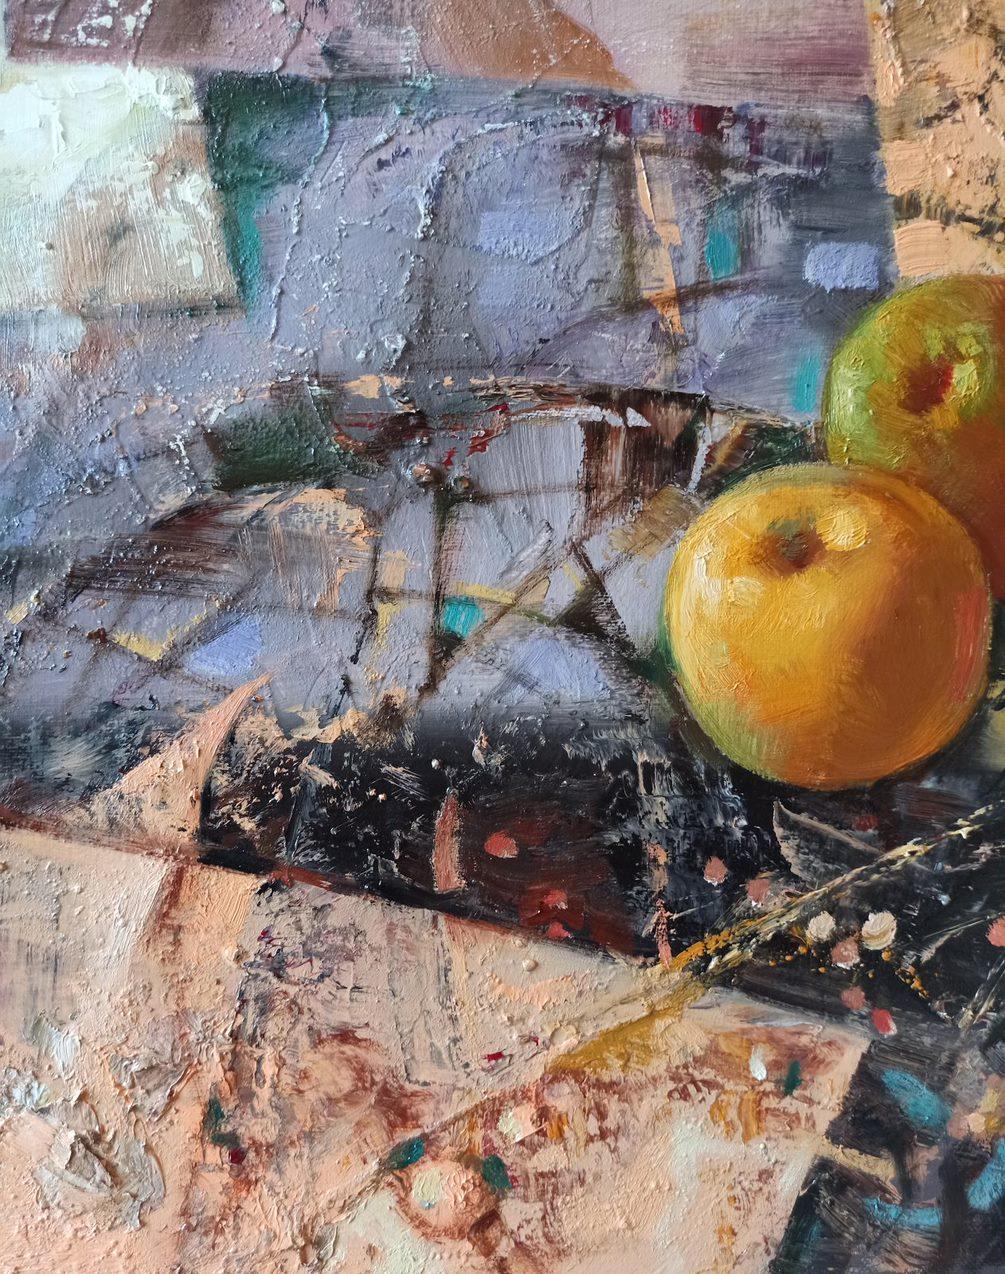 Artist: Anatoly Borisovich Tarabanov
Work: Original oil painting, handmade artwork, one of a kind 
Medium: Oil on Canvas 
Year: 2019
Style: Surrealism
Title: Apples
Size: 23.5